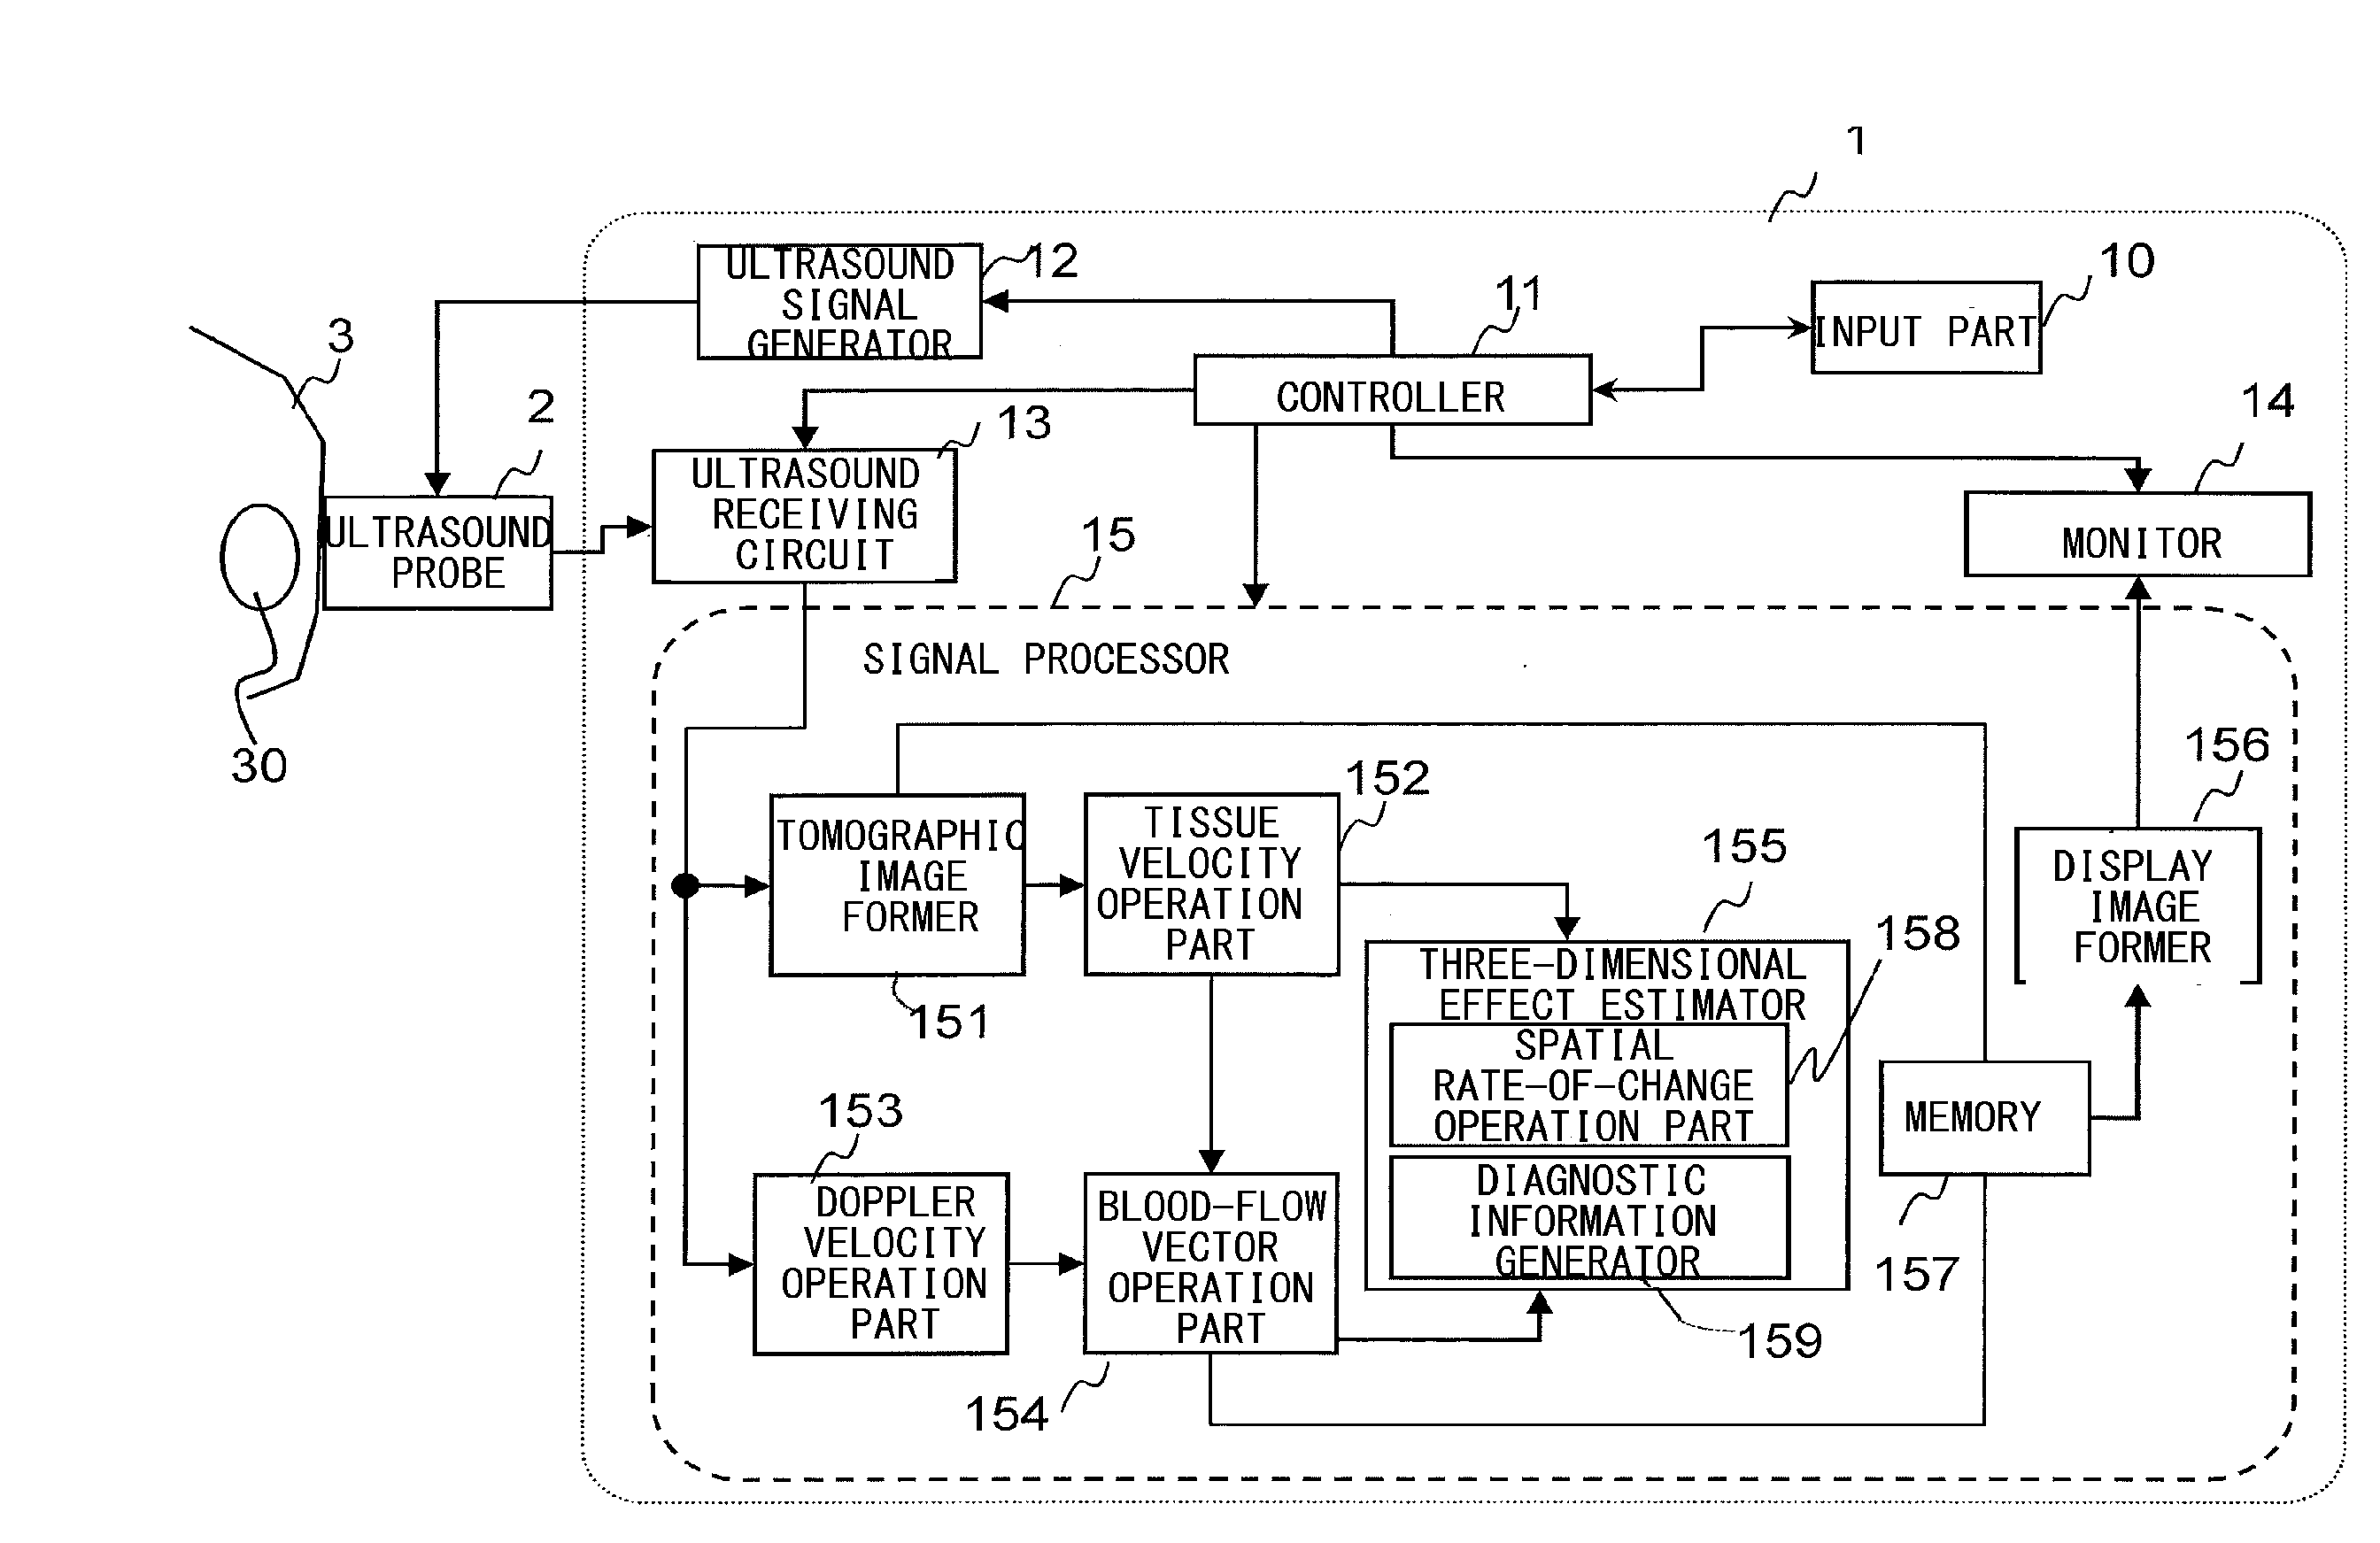 Ultrasonic image pickup device and method